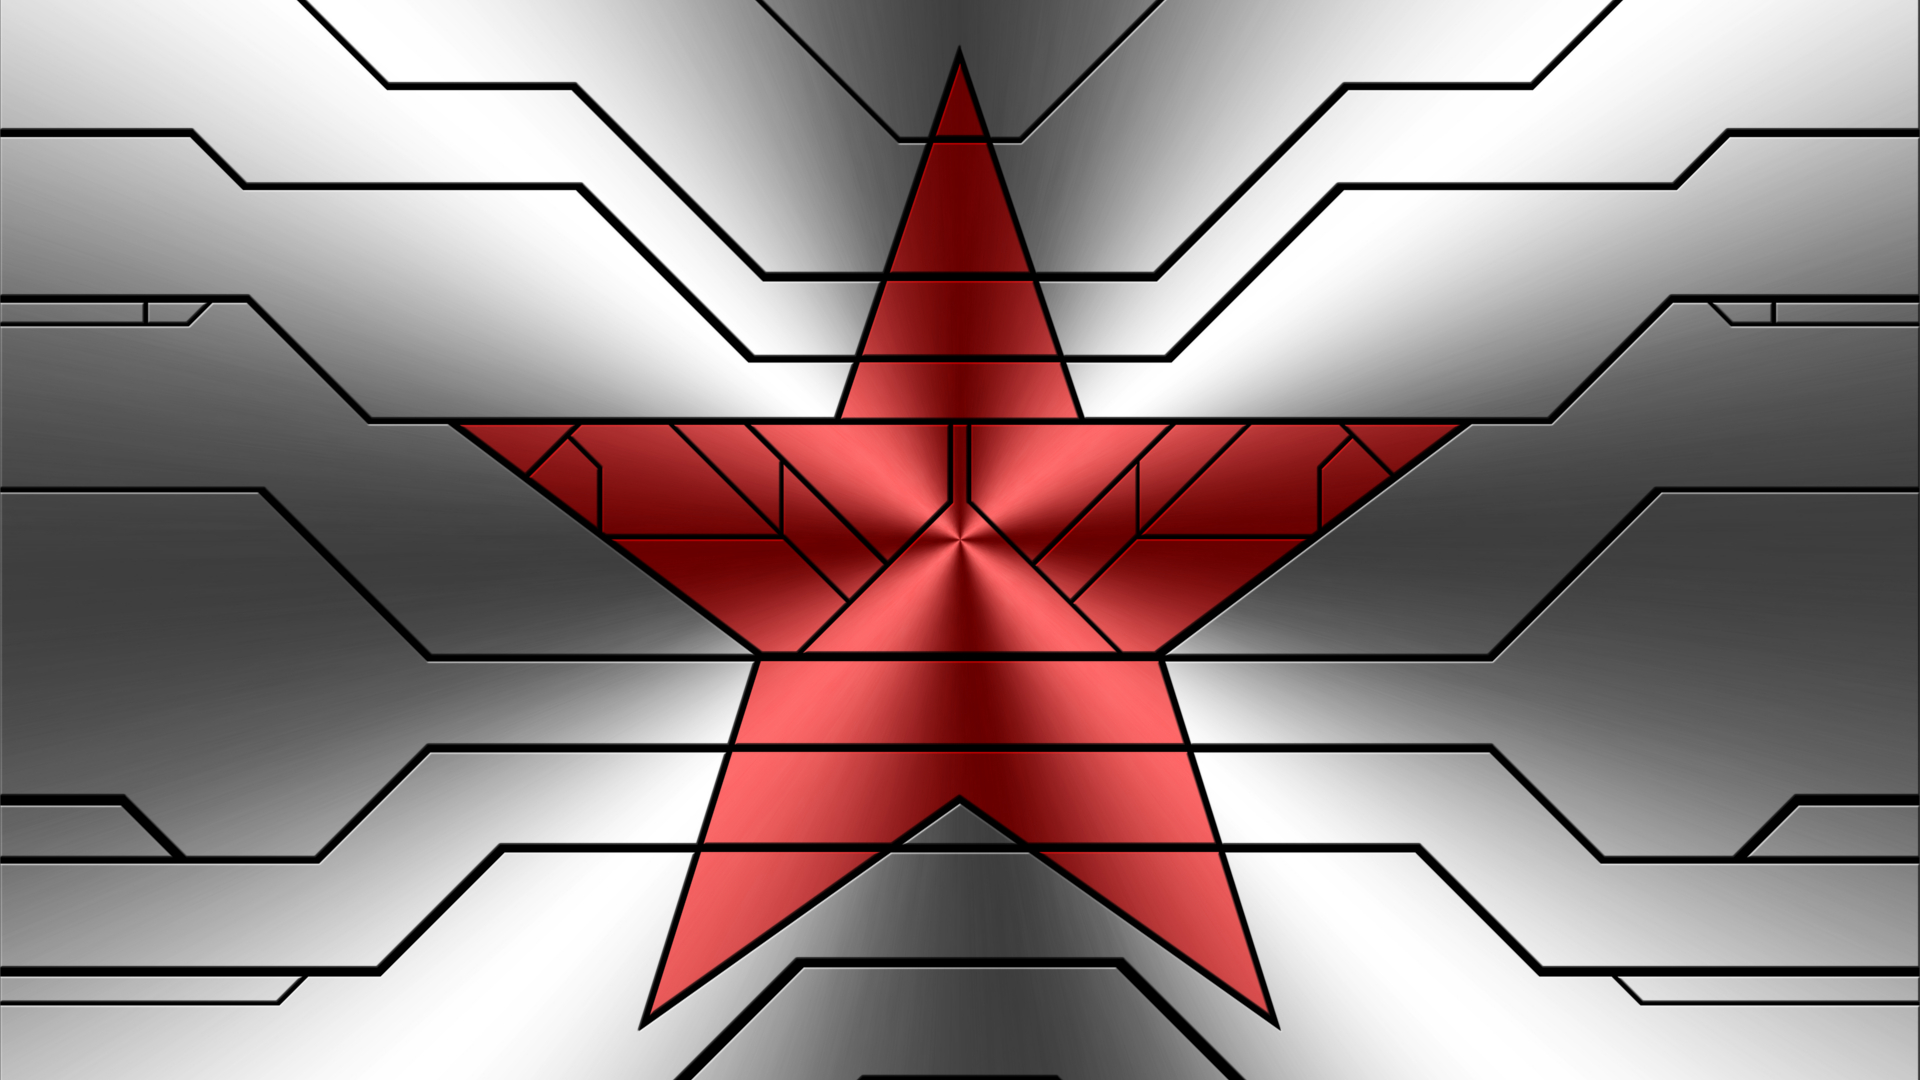 Winter Soldier Logo Hd Wallpaper Background Image 1920x1080 Id